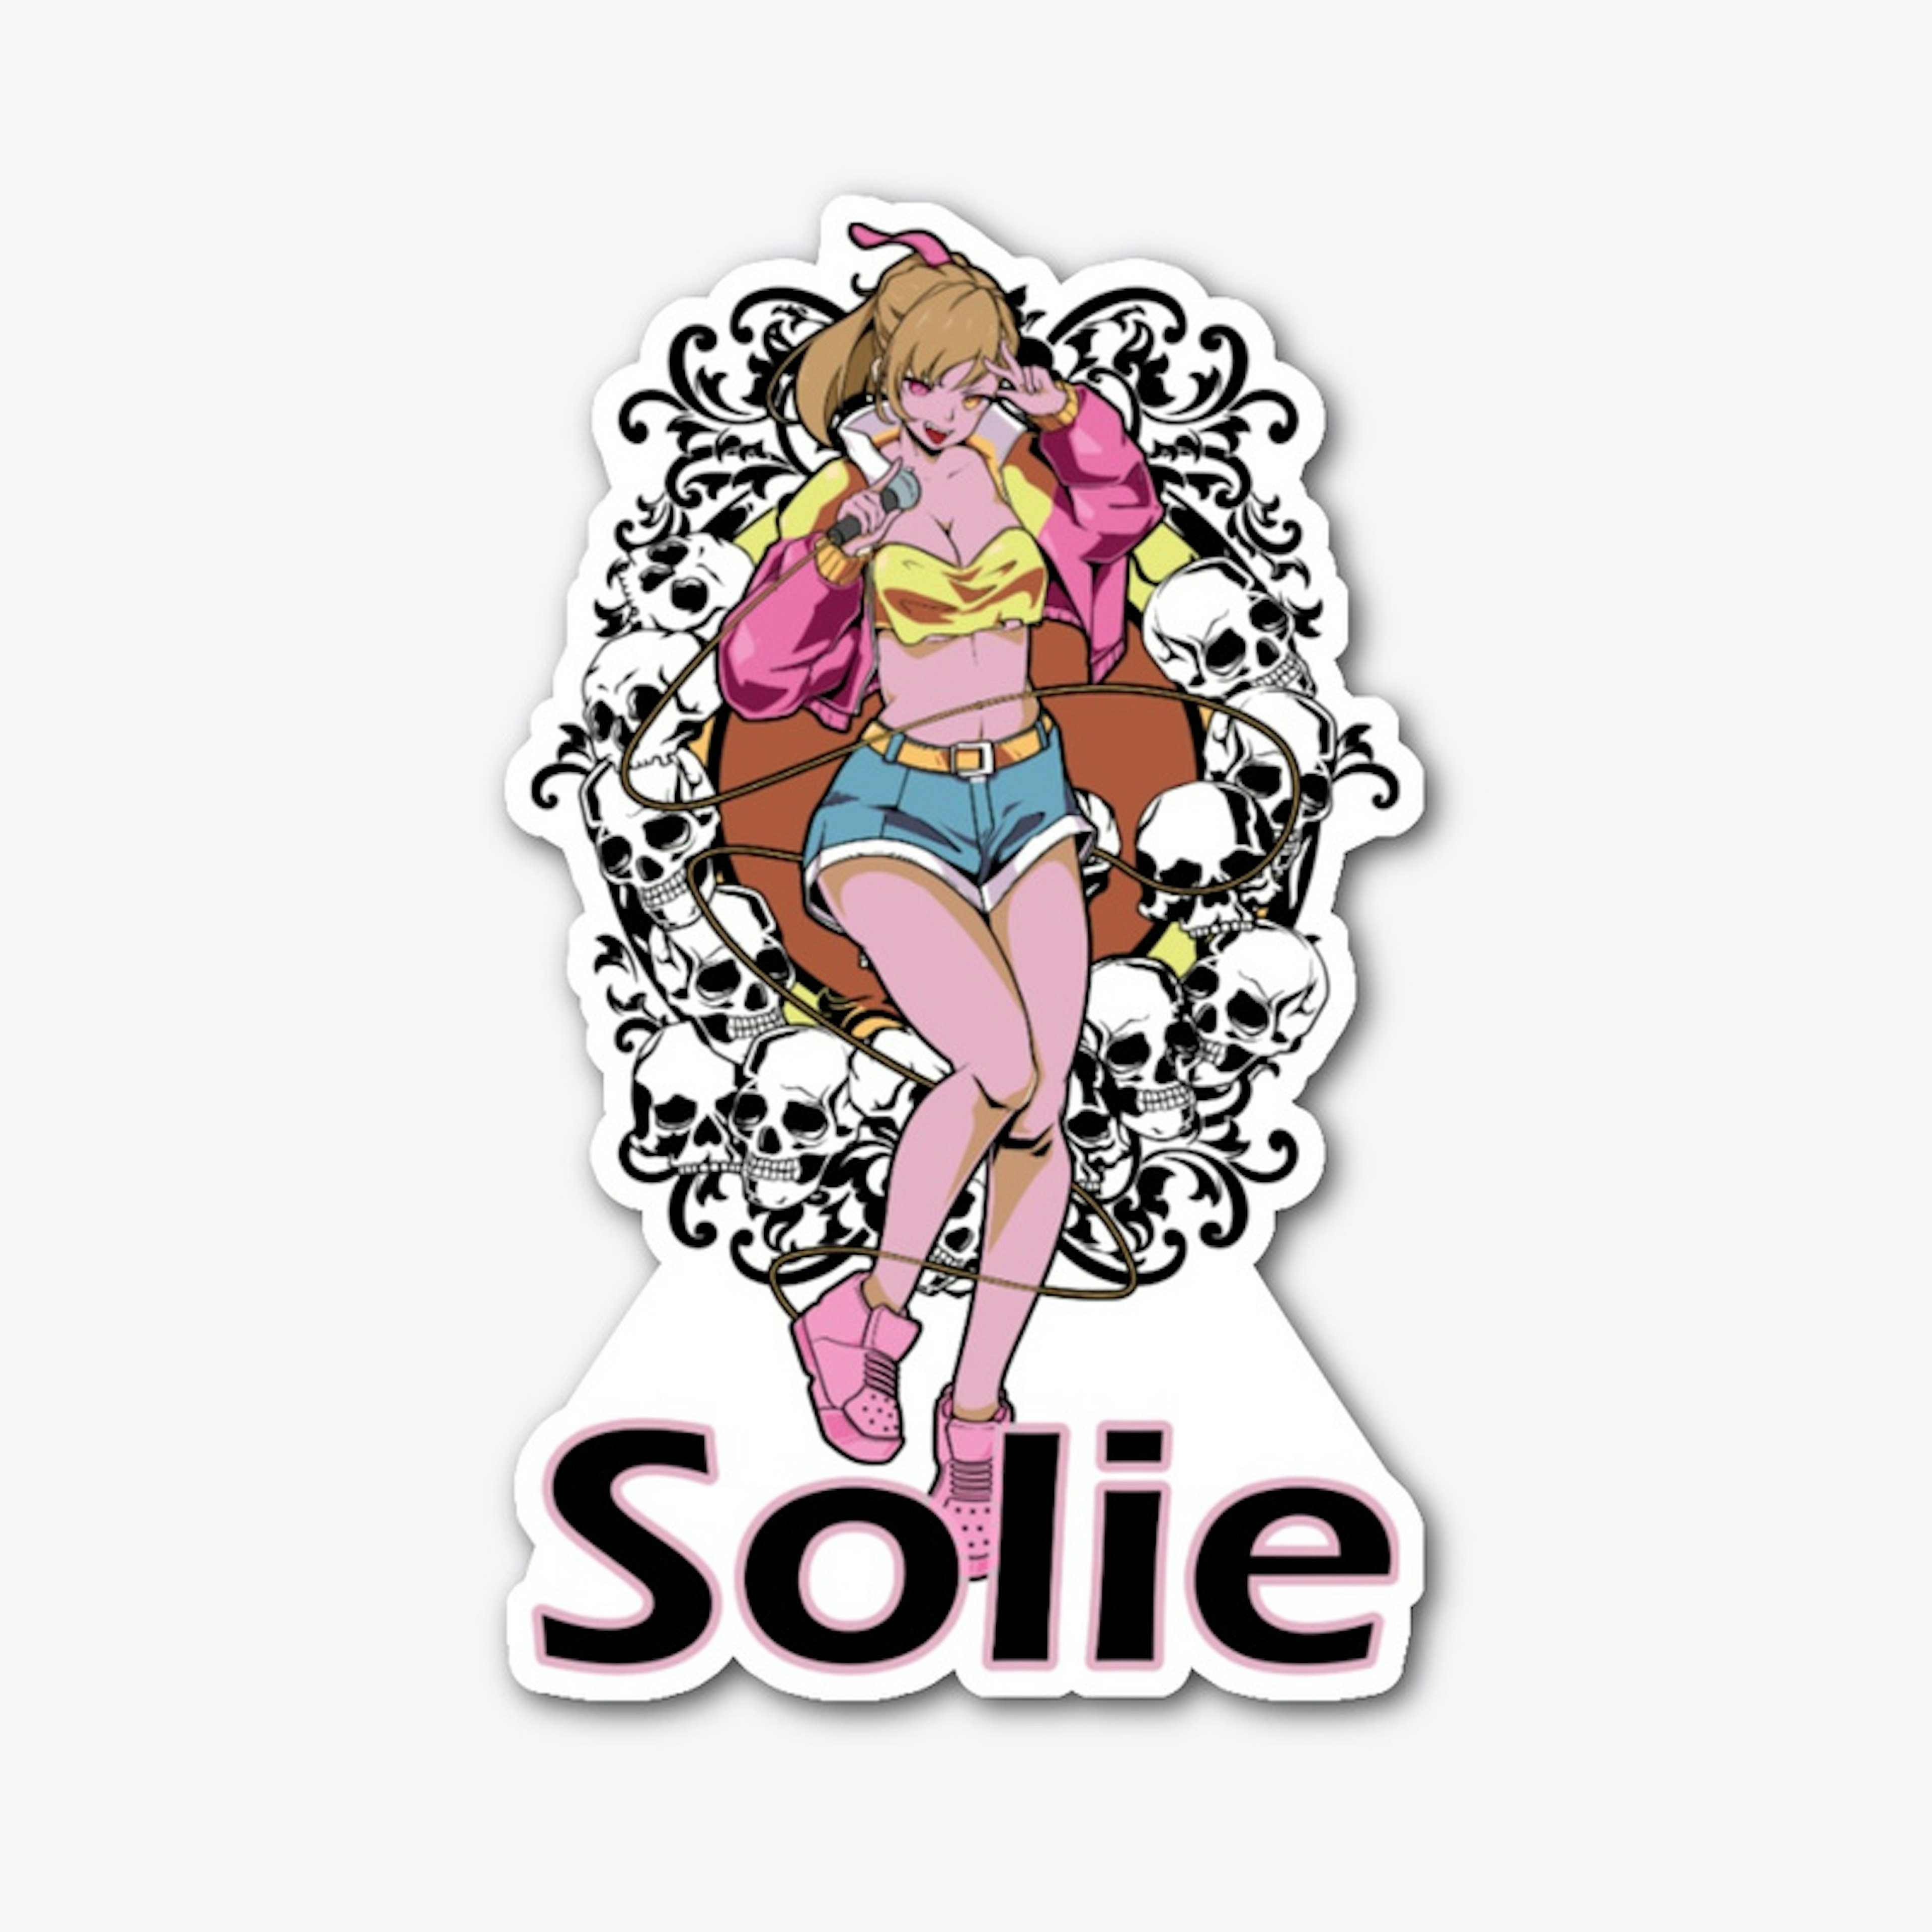 Solie